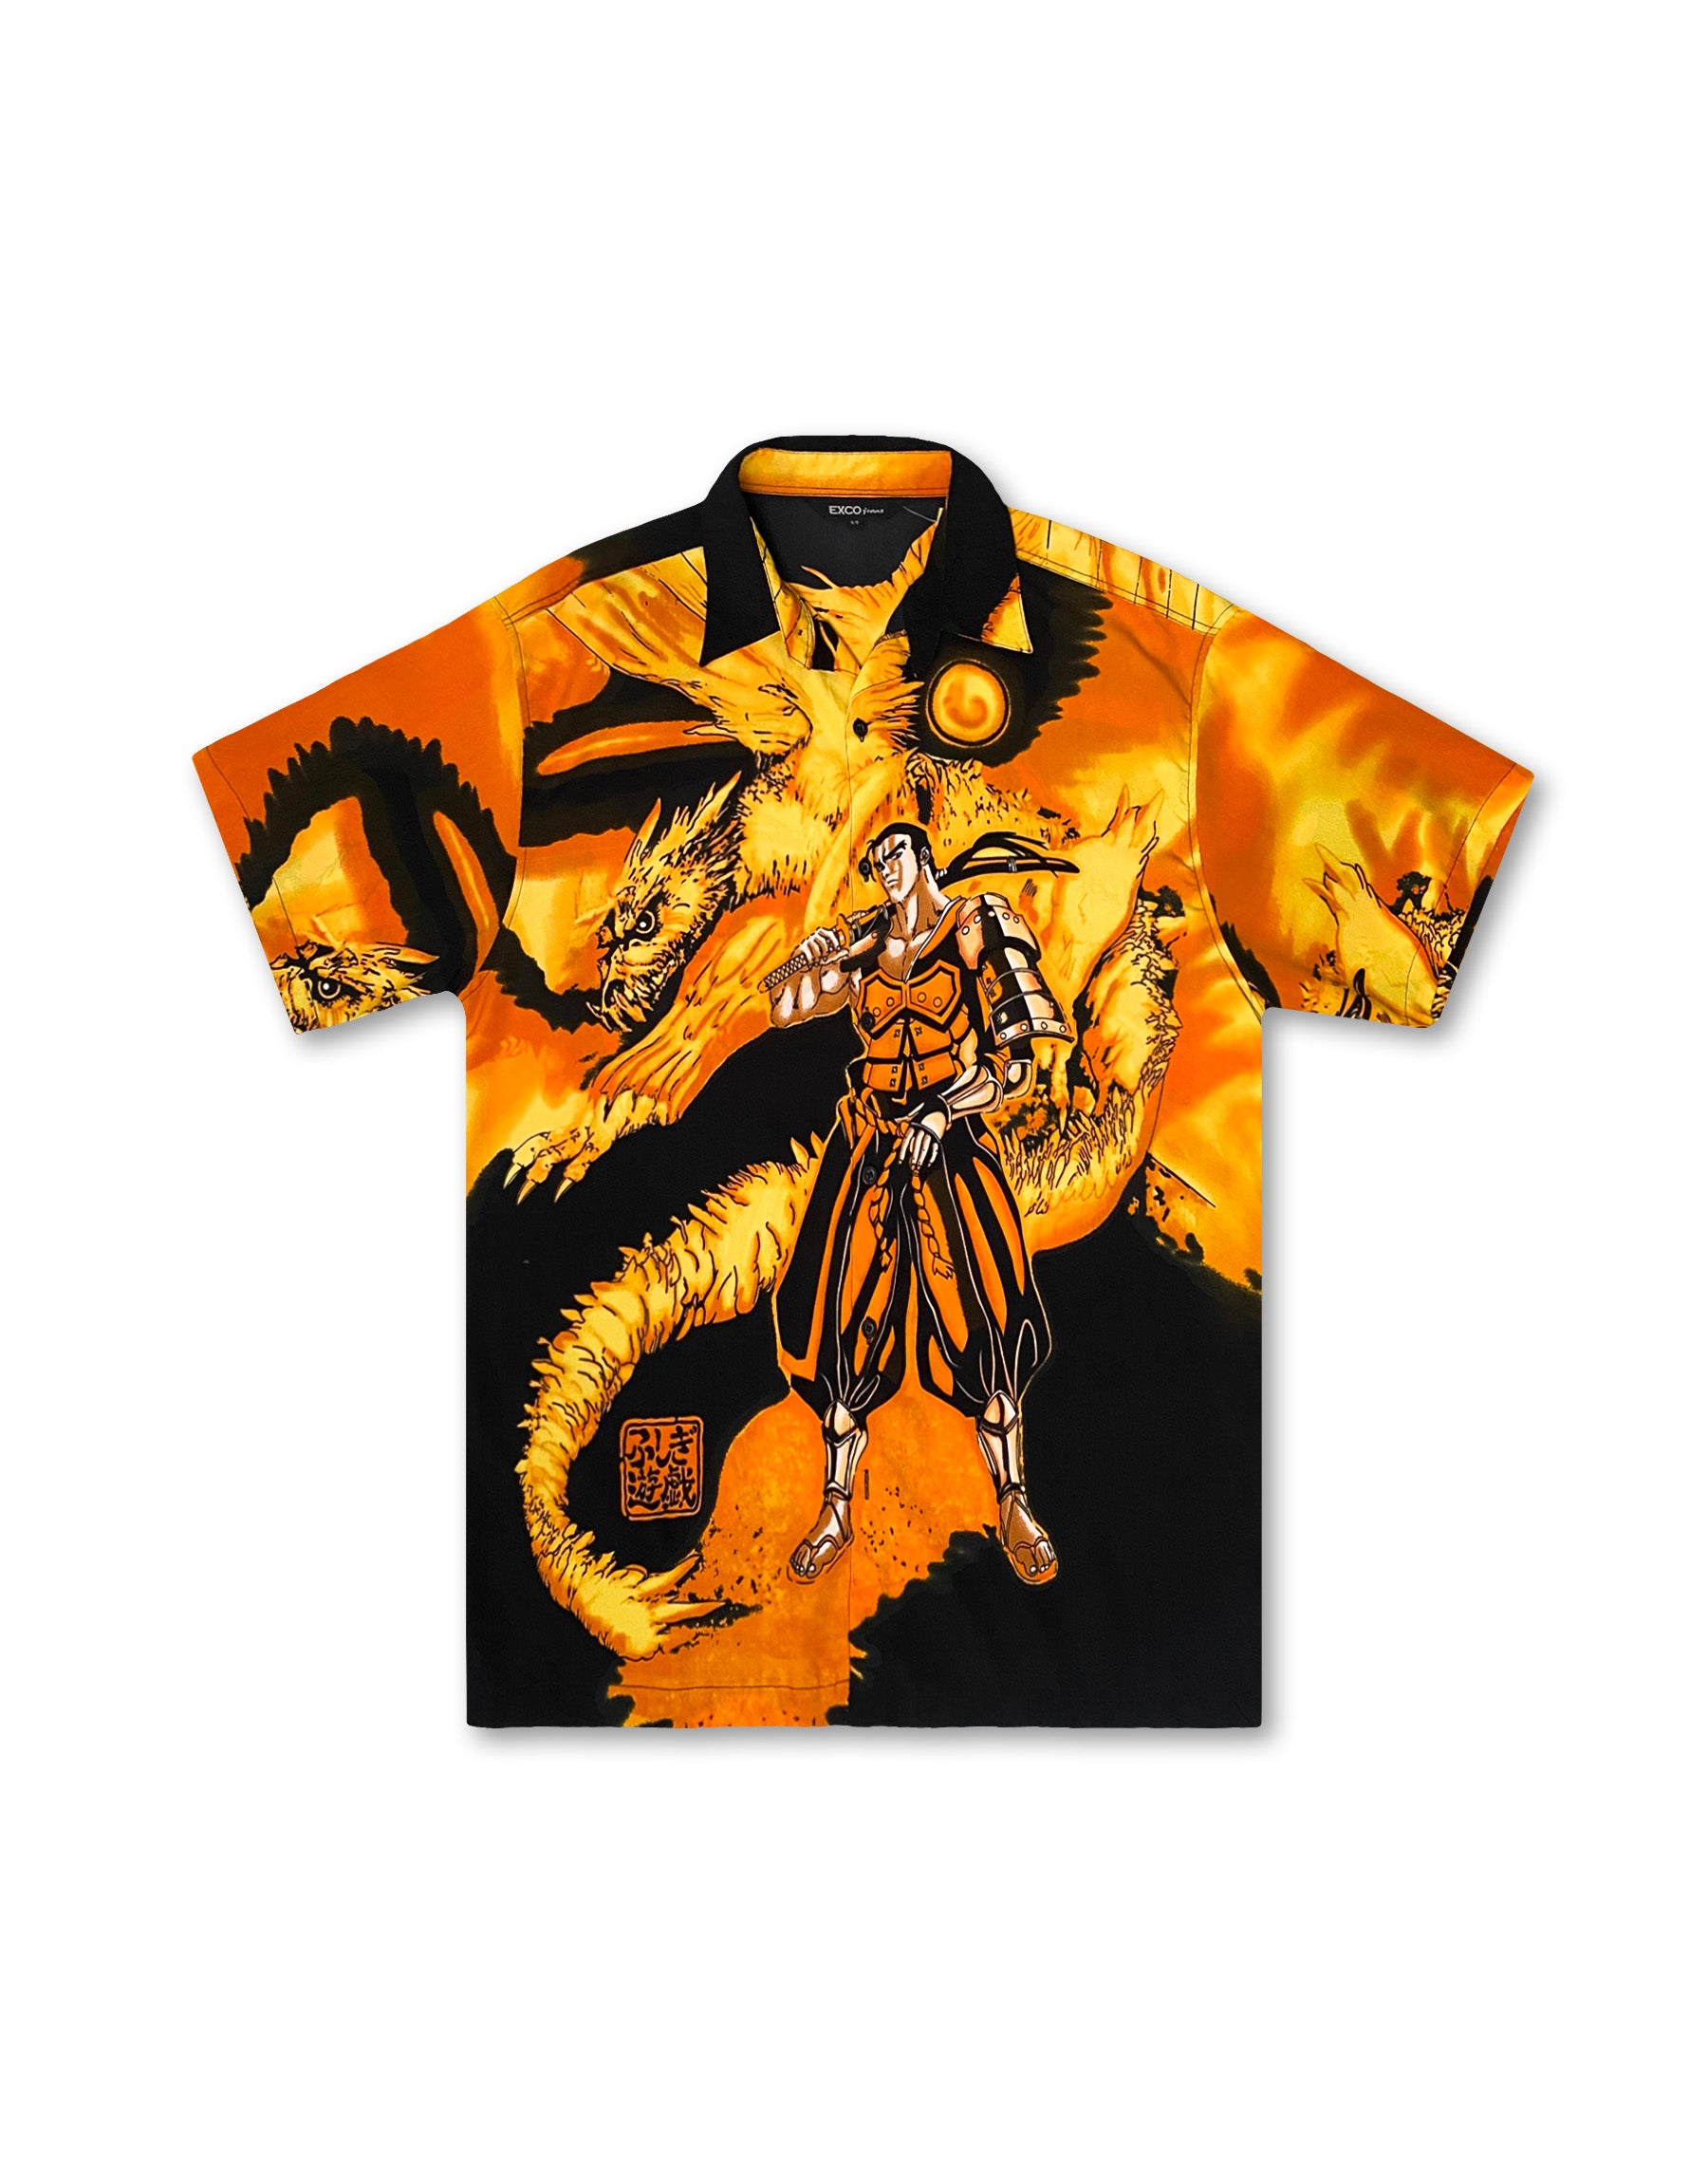 Dtek Sport Anime Graphic Shirt Red Orange Short Sleeve Ninja Samurai Men XL  | eBay